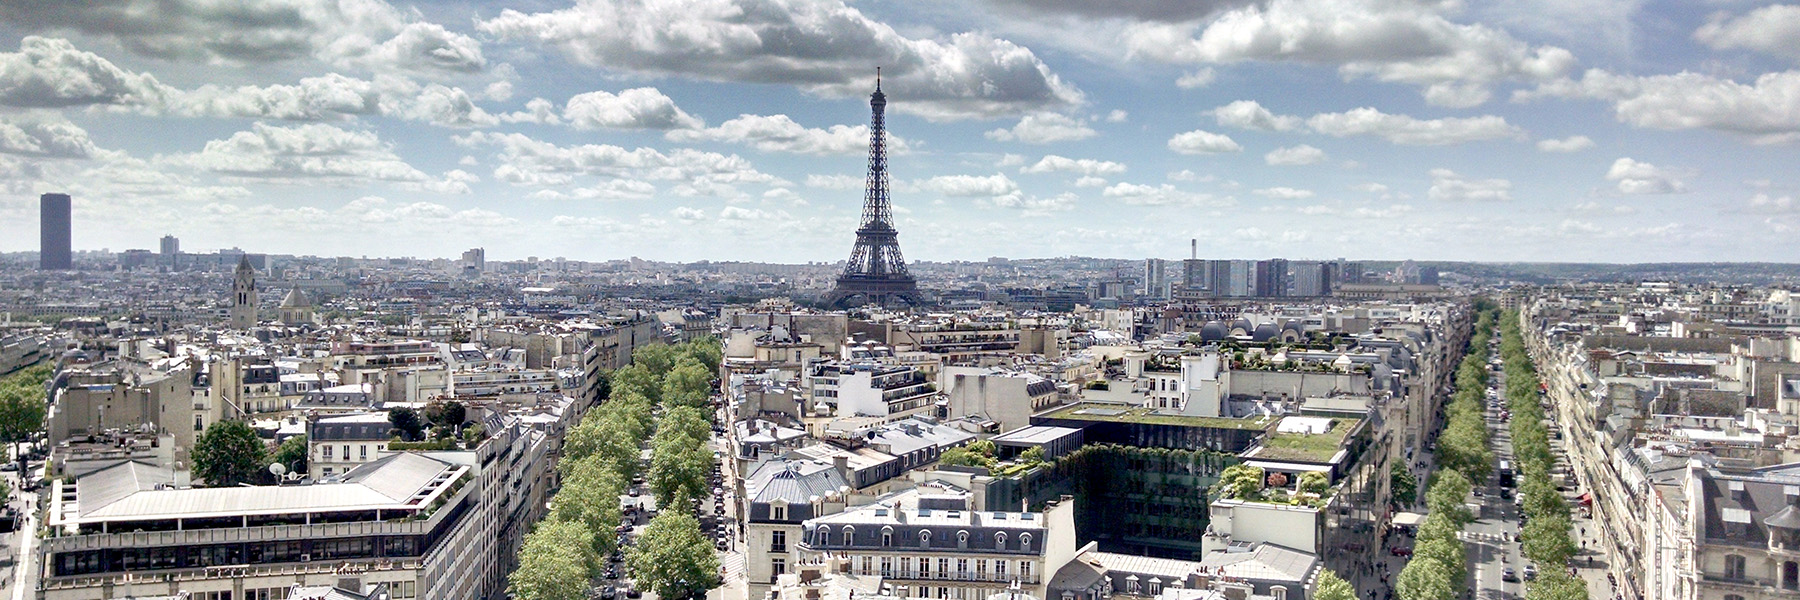 Aerial image of Paris, France.